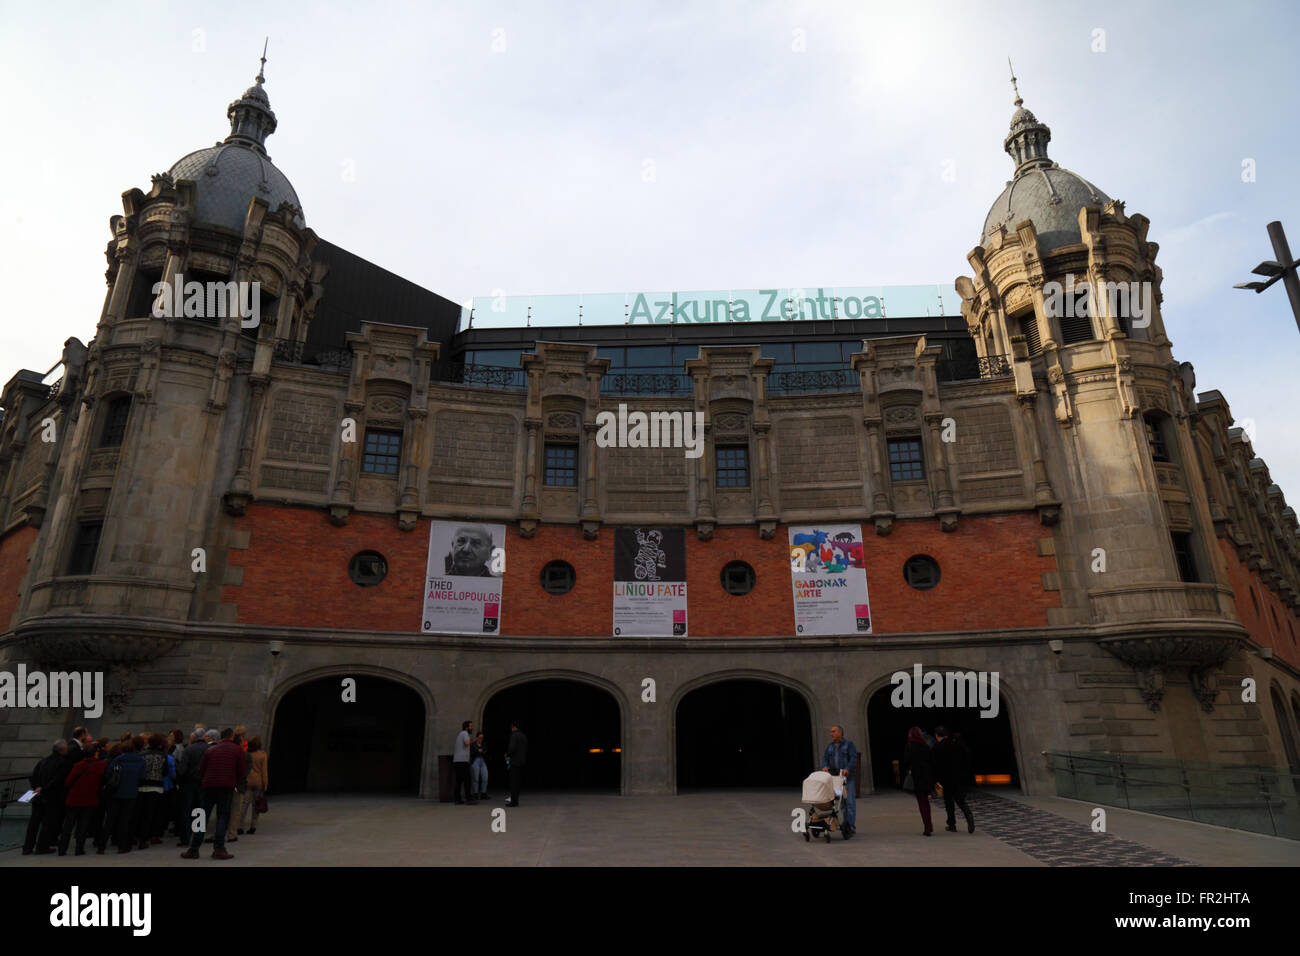 Main entrance of the Alhondiga building, now the Azkuna Zentroa cultural centre, Bilbao, Basque Country, Spain Stock Photo